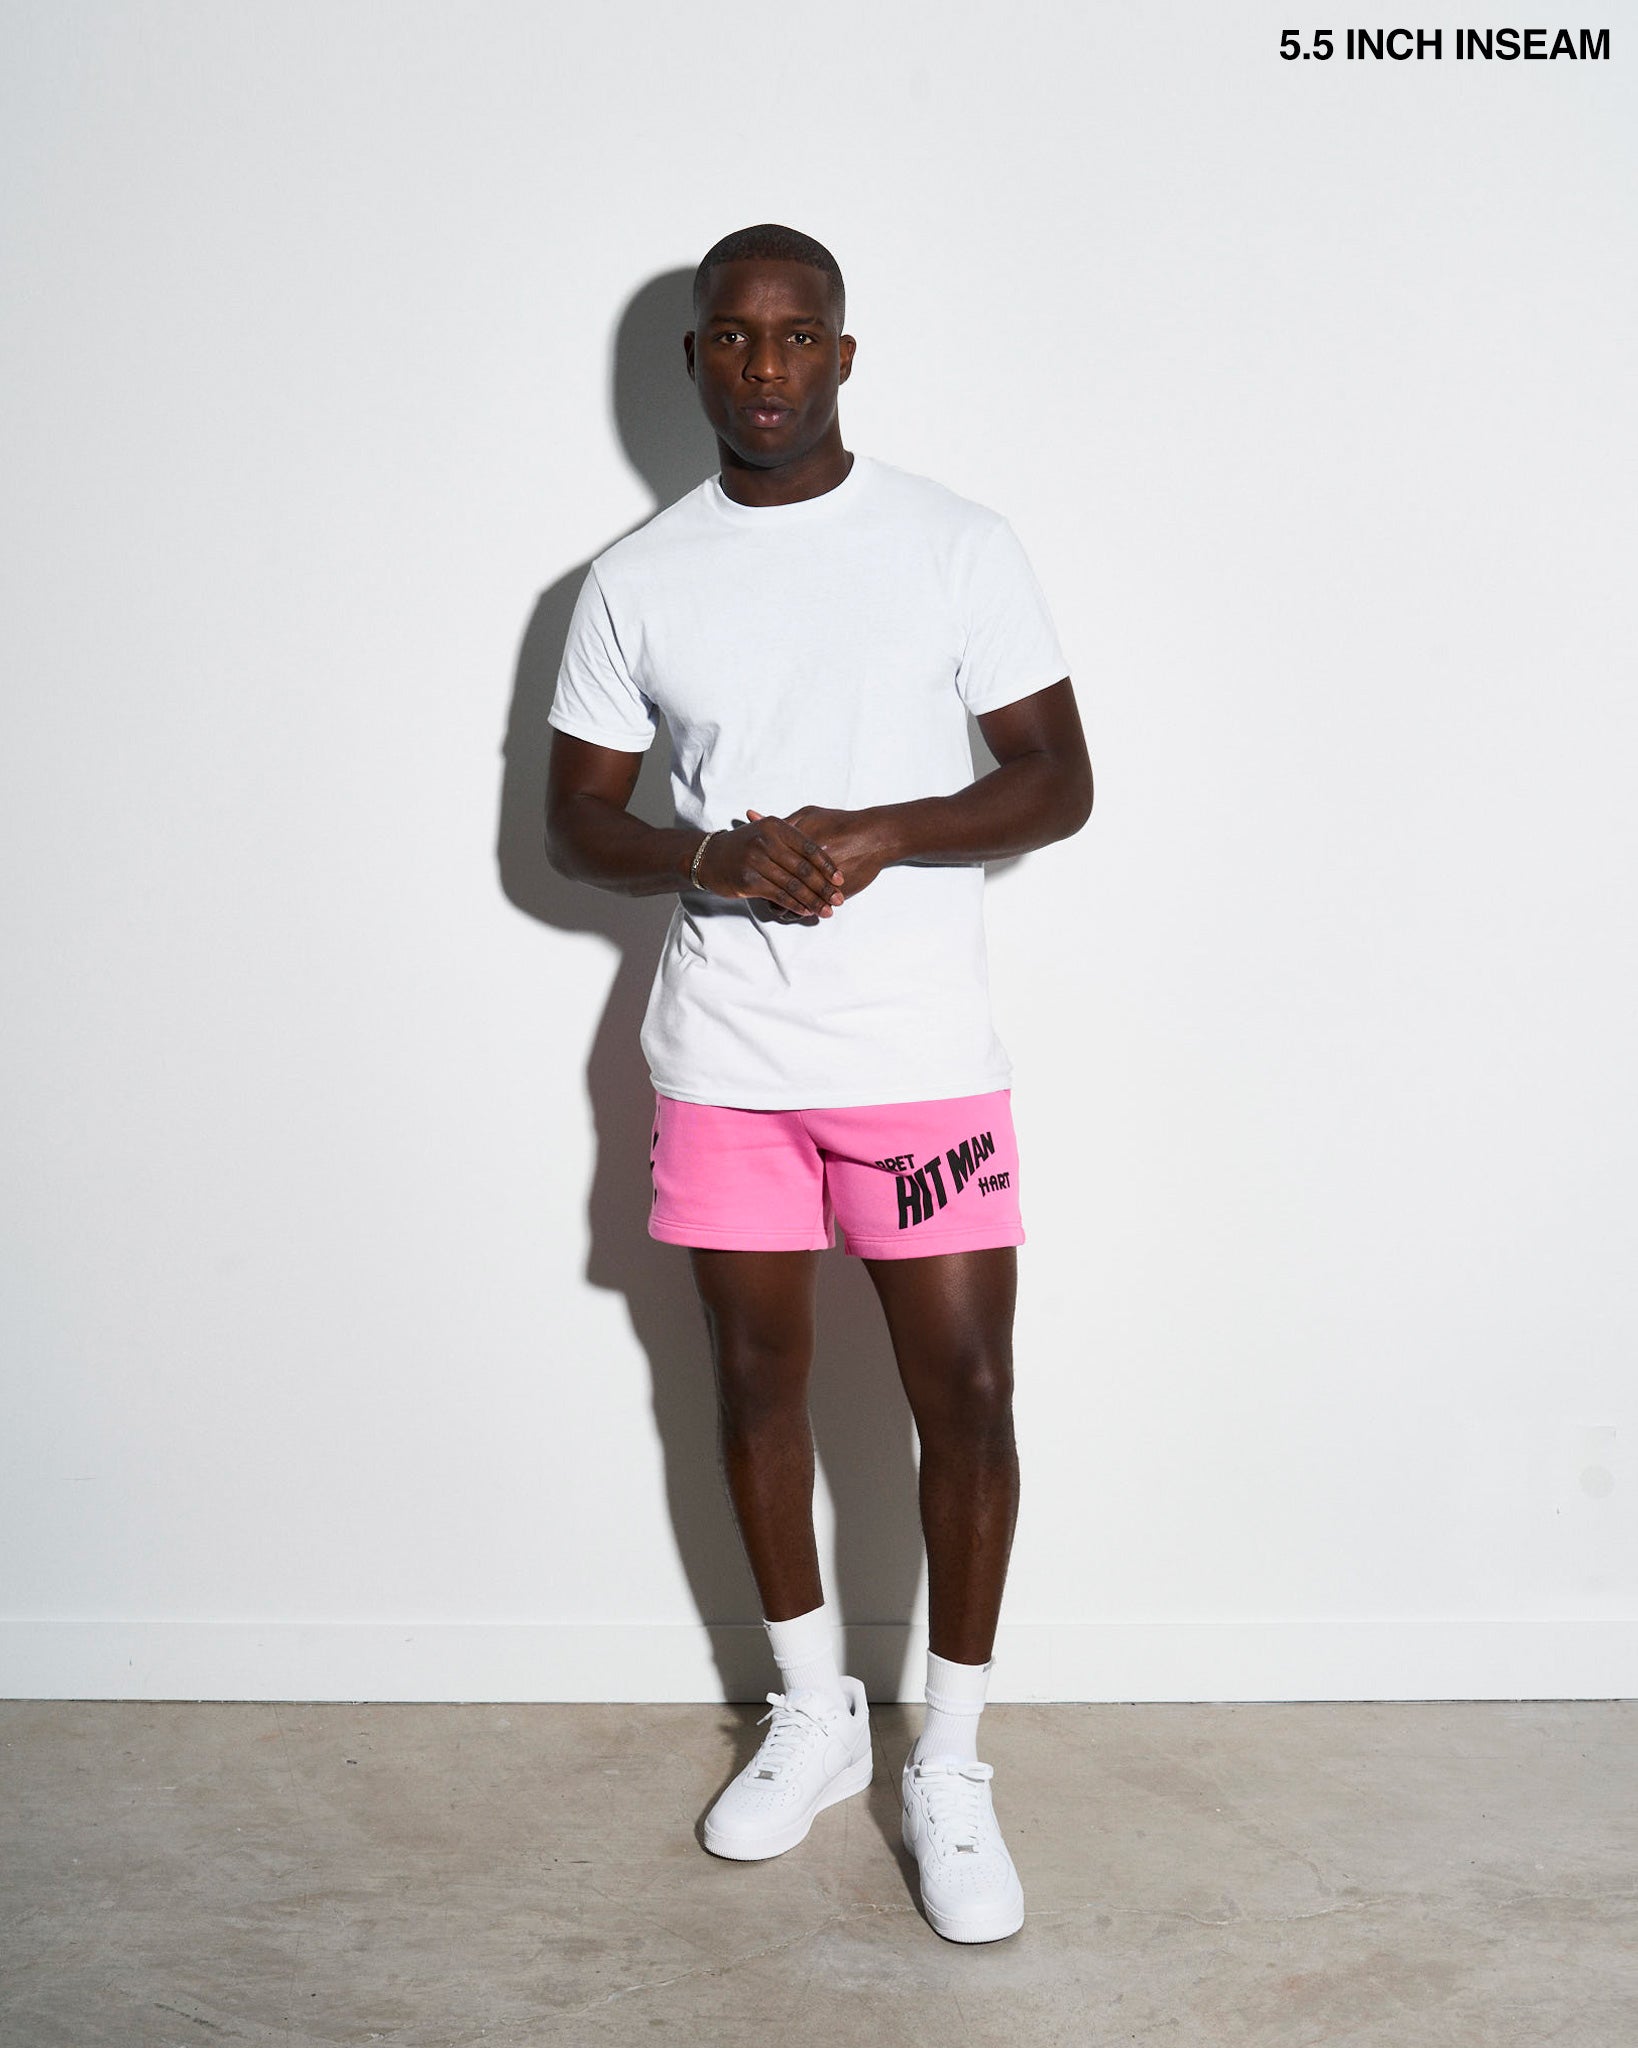 Bret Hart Pink Fleece Shorts